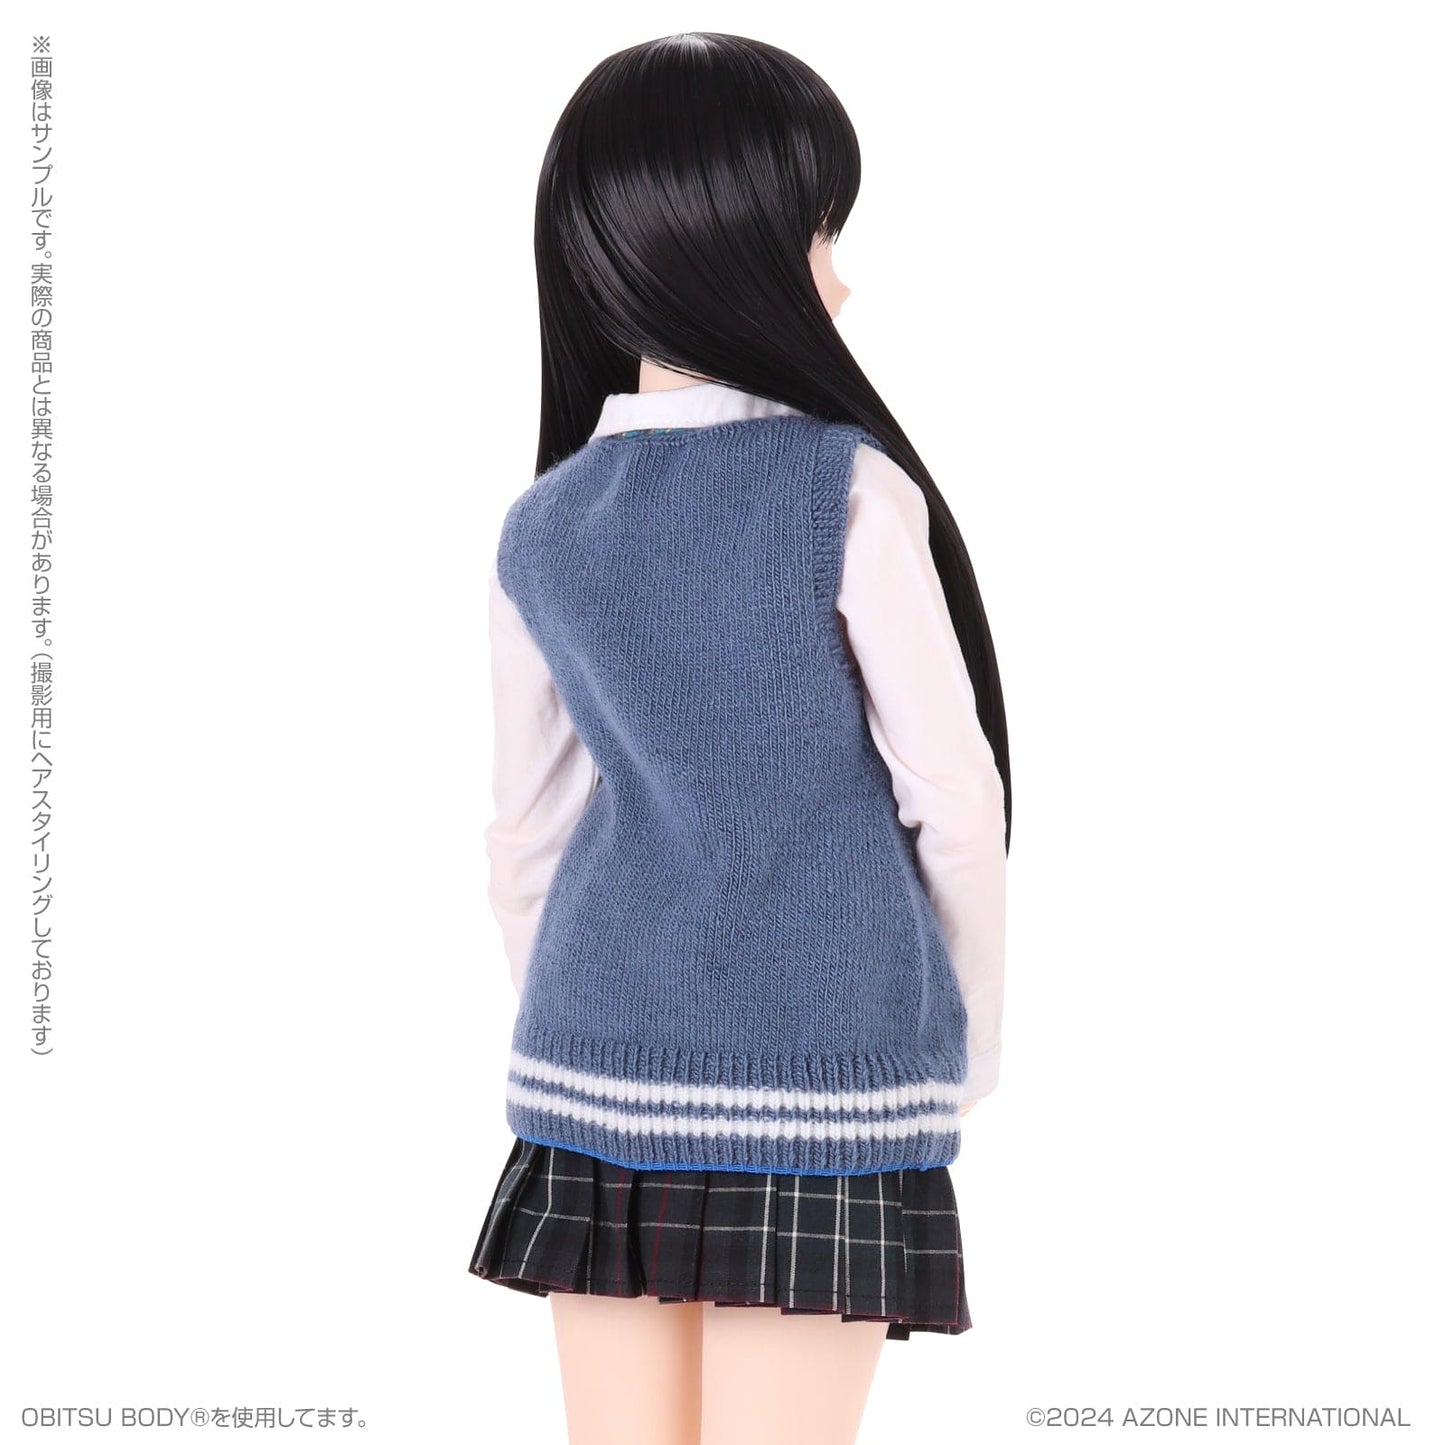 【AZONE】Kazuharu Kina School Uniform Collection / Yui 預購